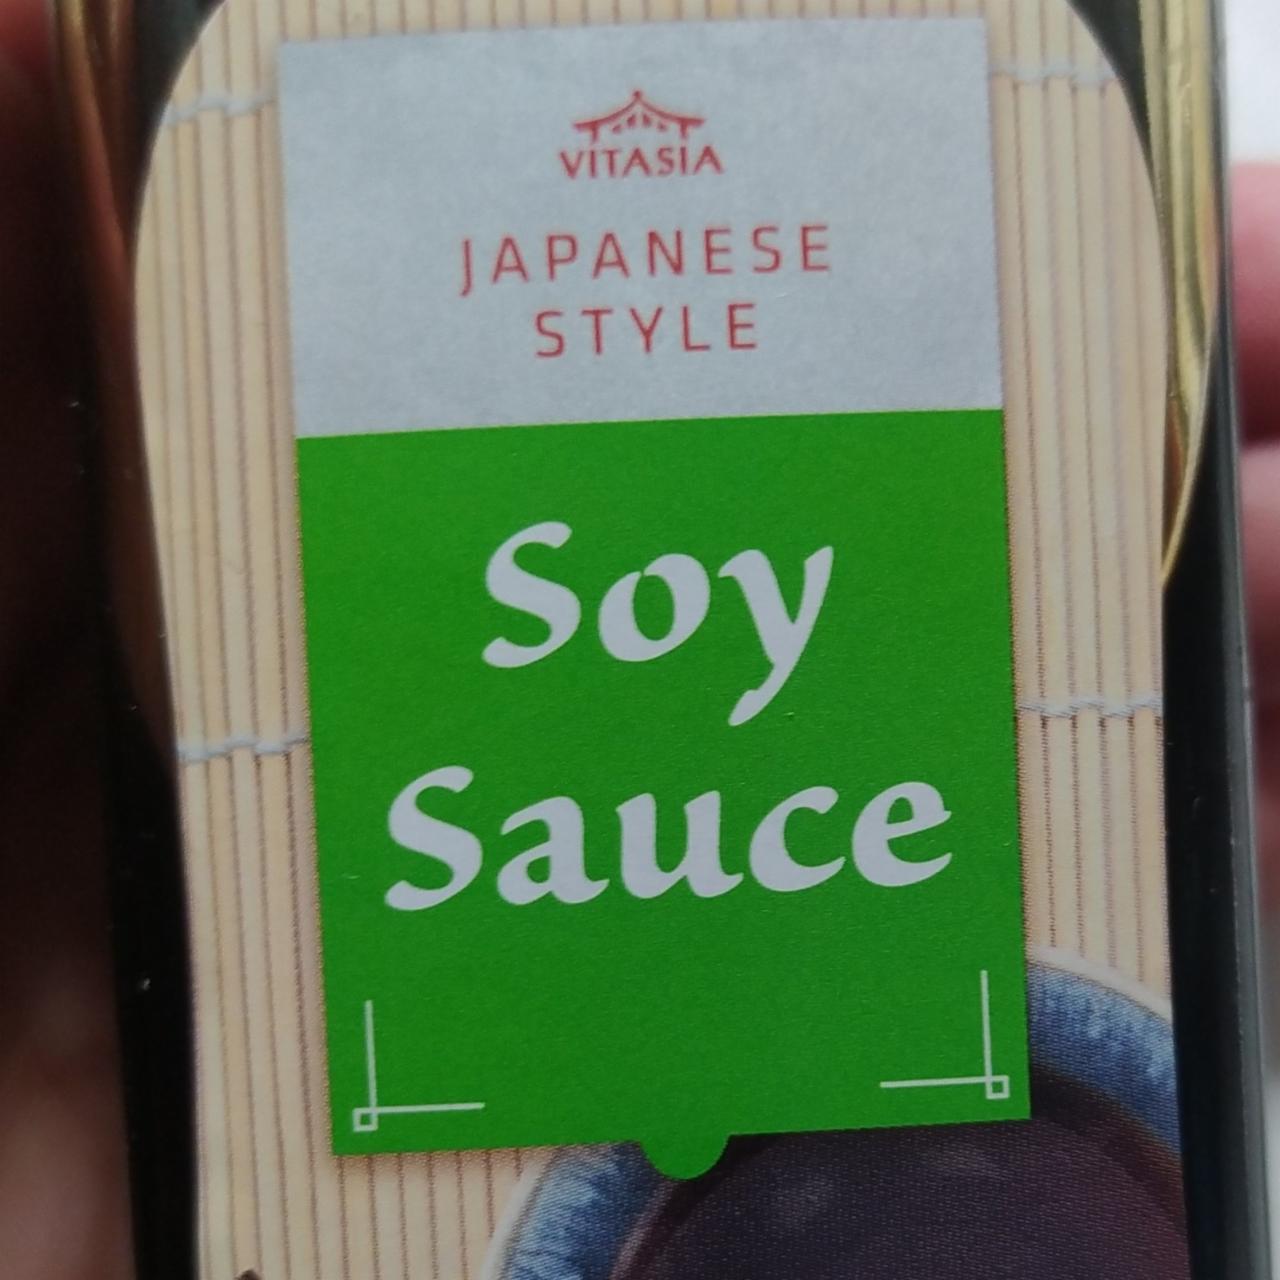 Fotografie - Soy Sauce Japanese Style Vitasia